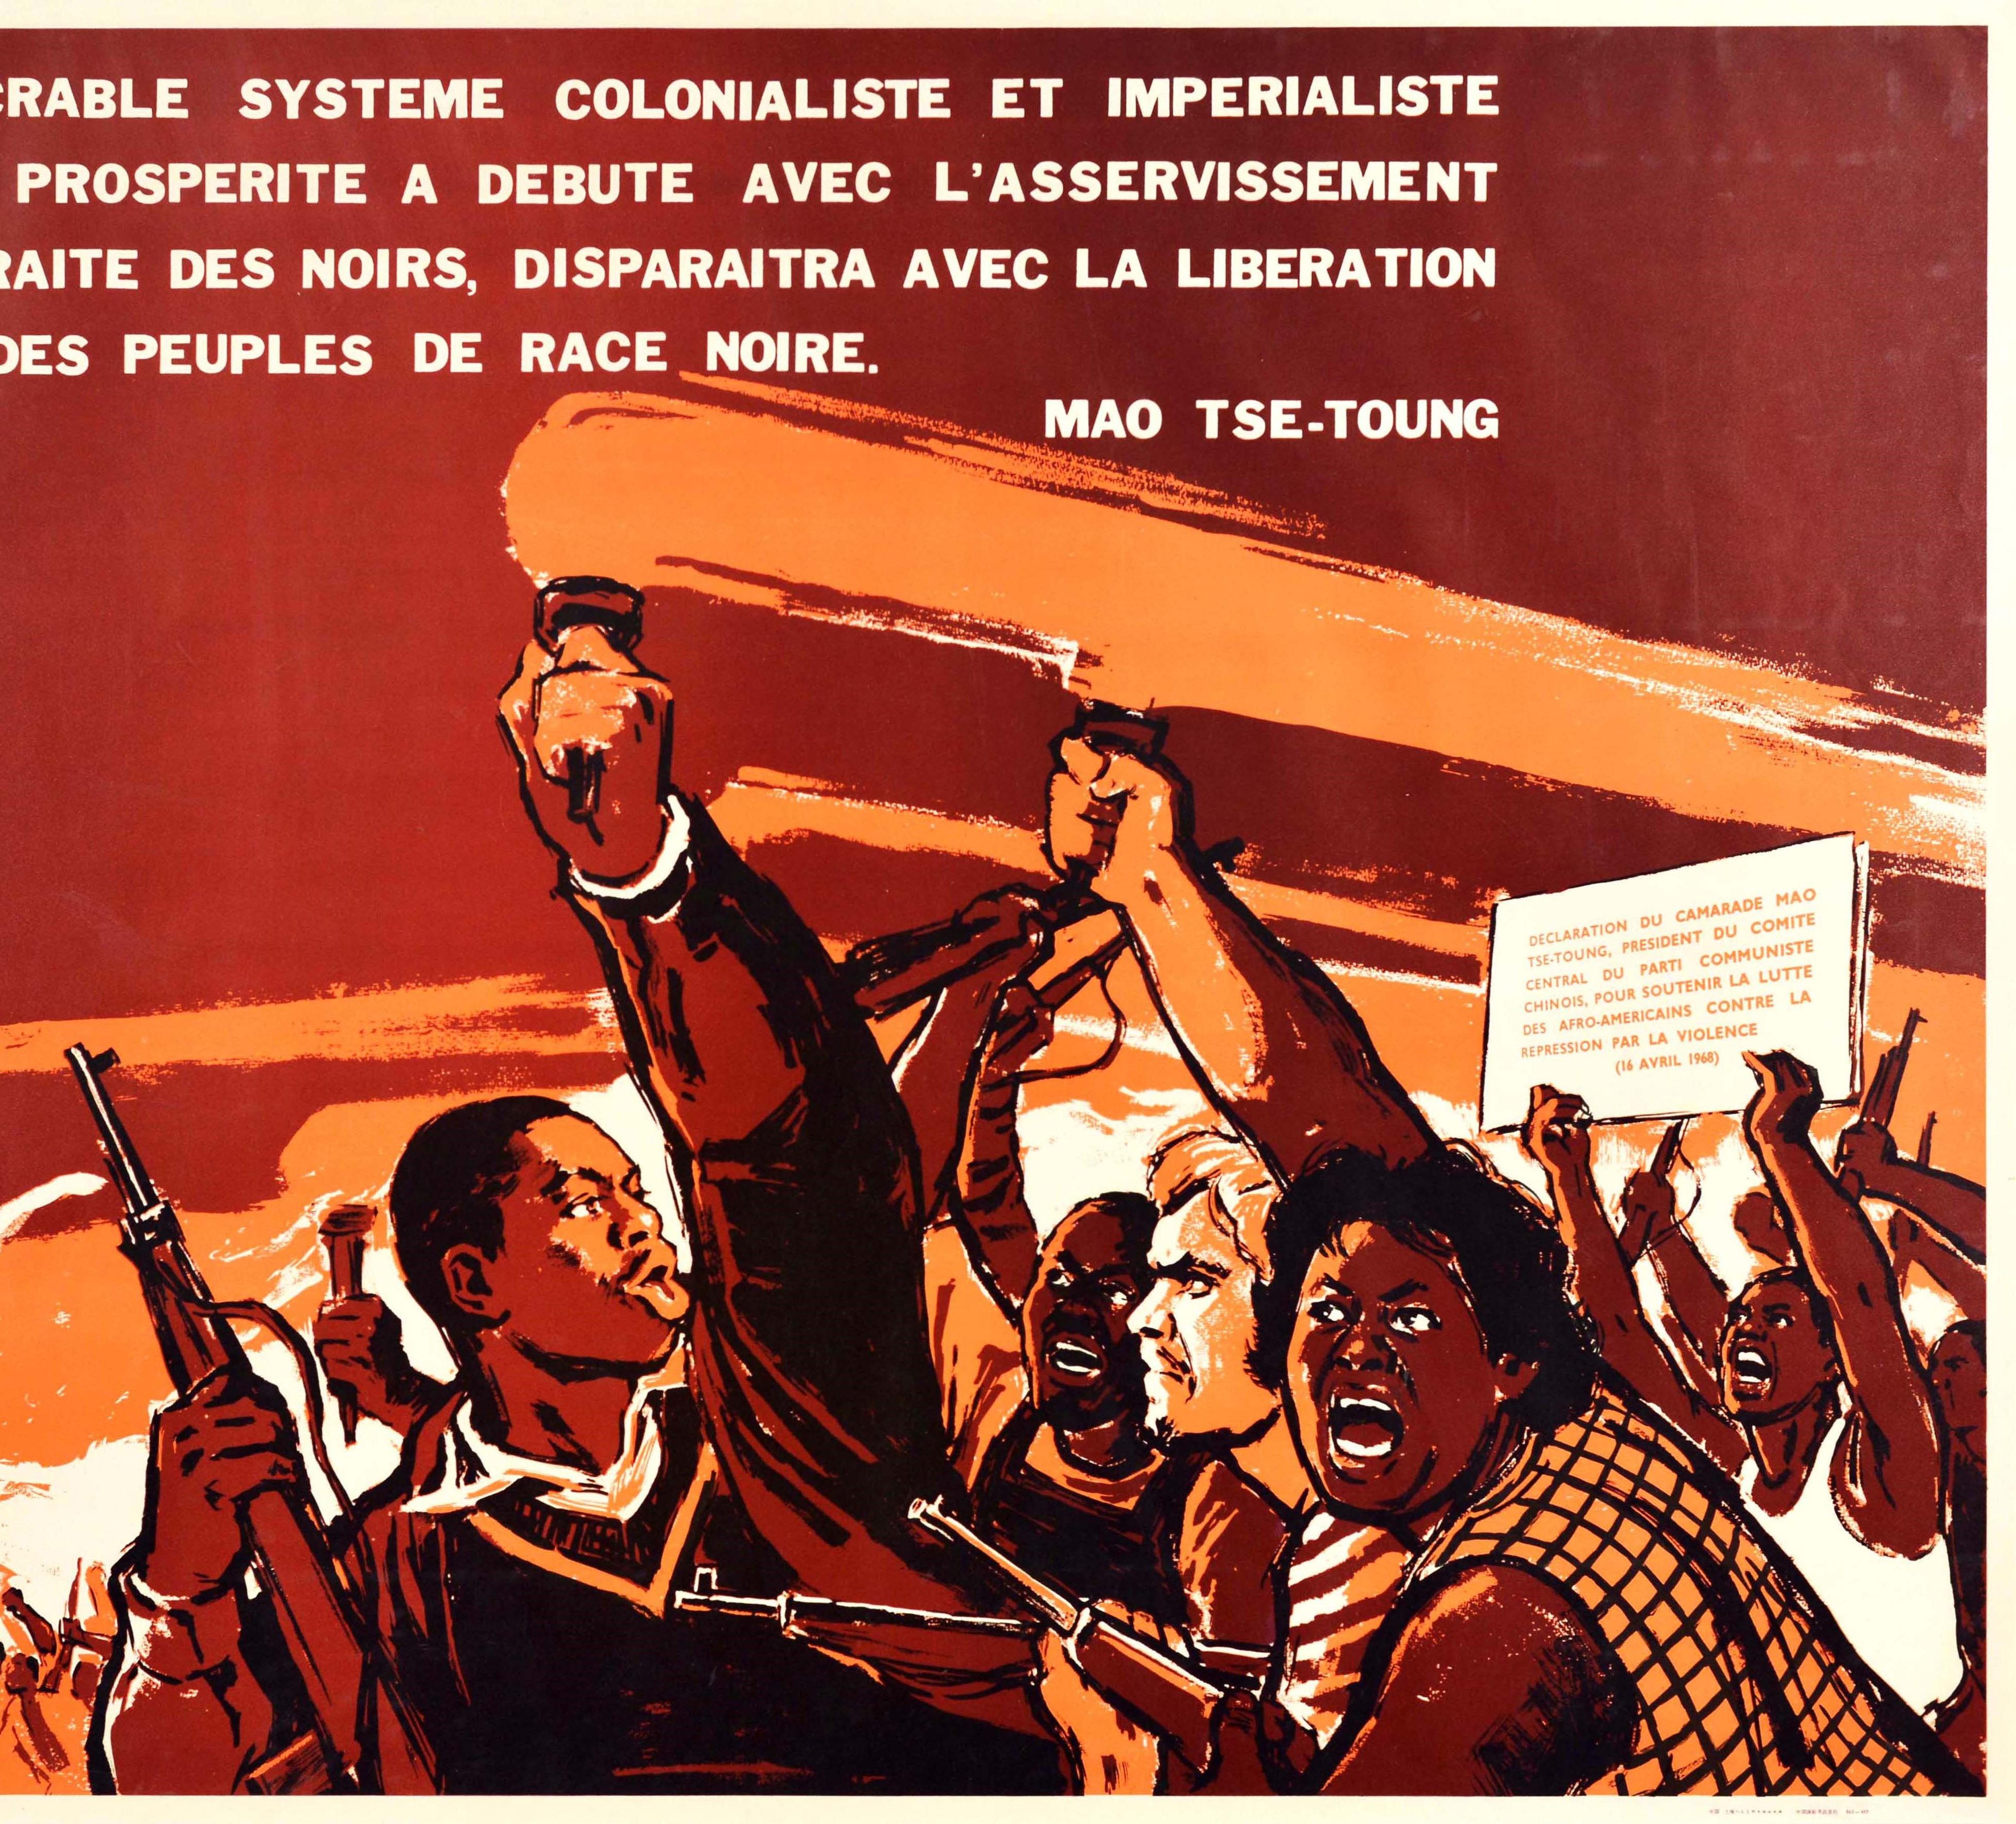 imperialism propaganda poster